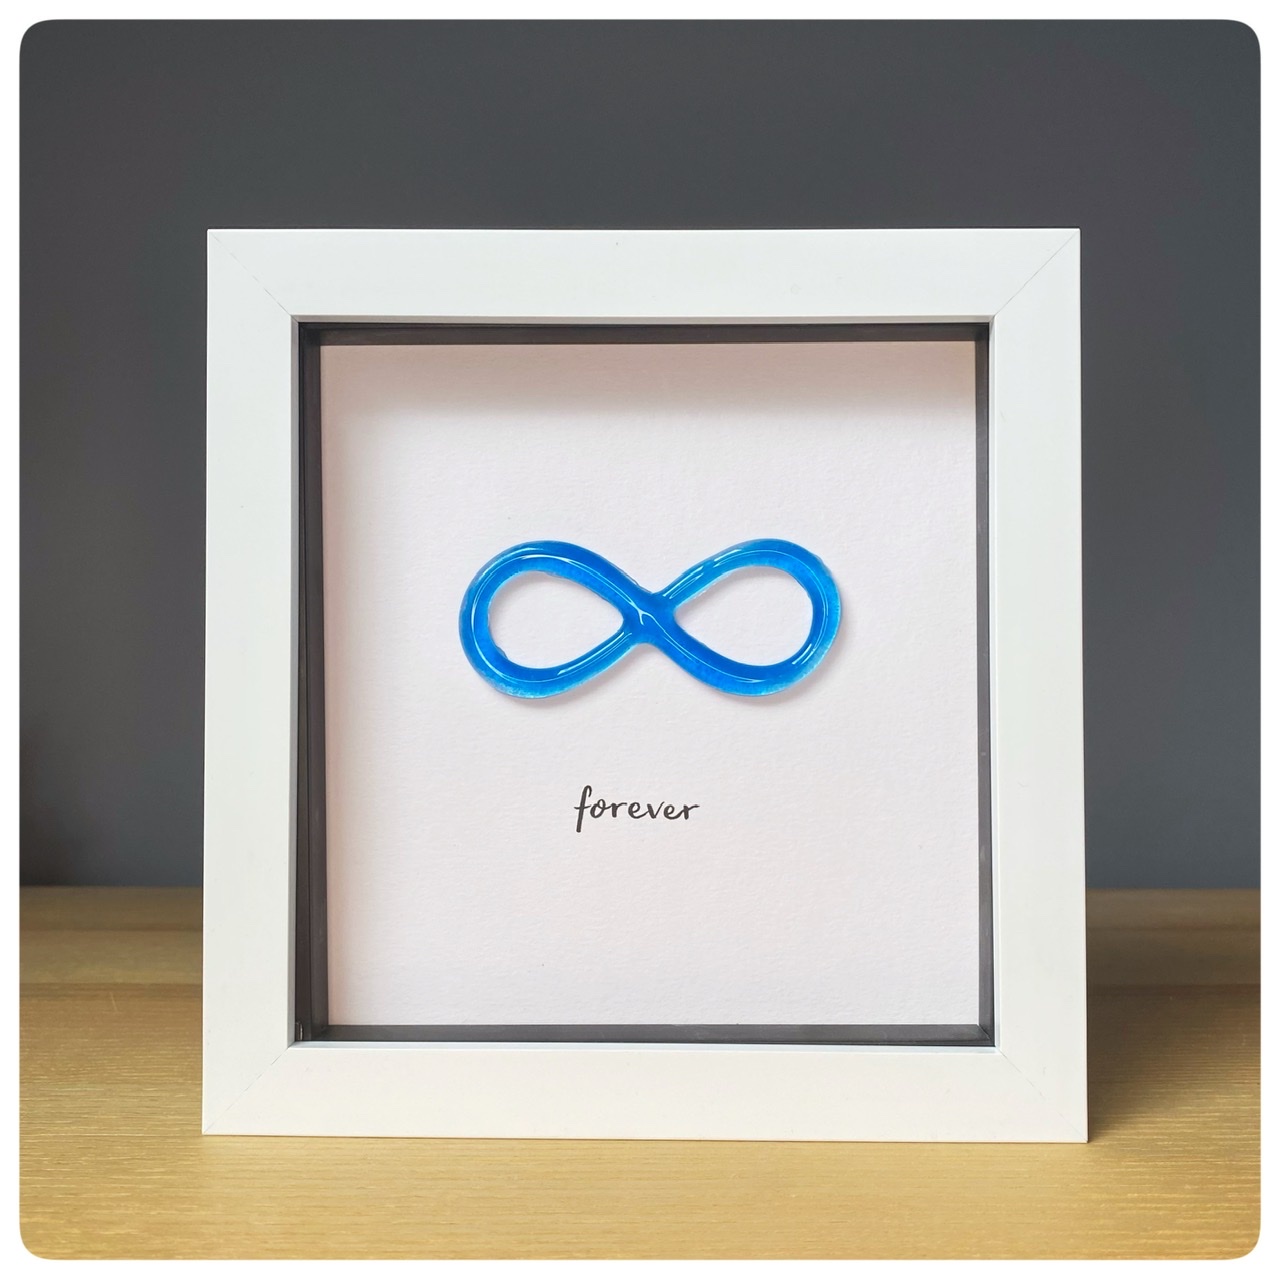 Forever blue glass infinity symbol in frame